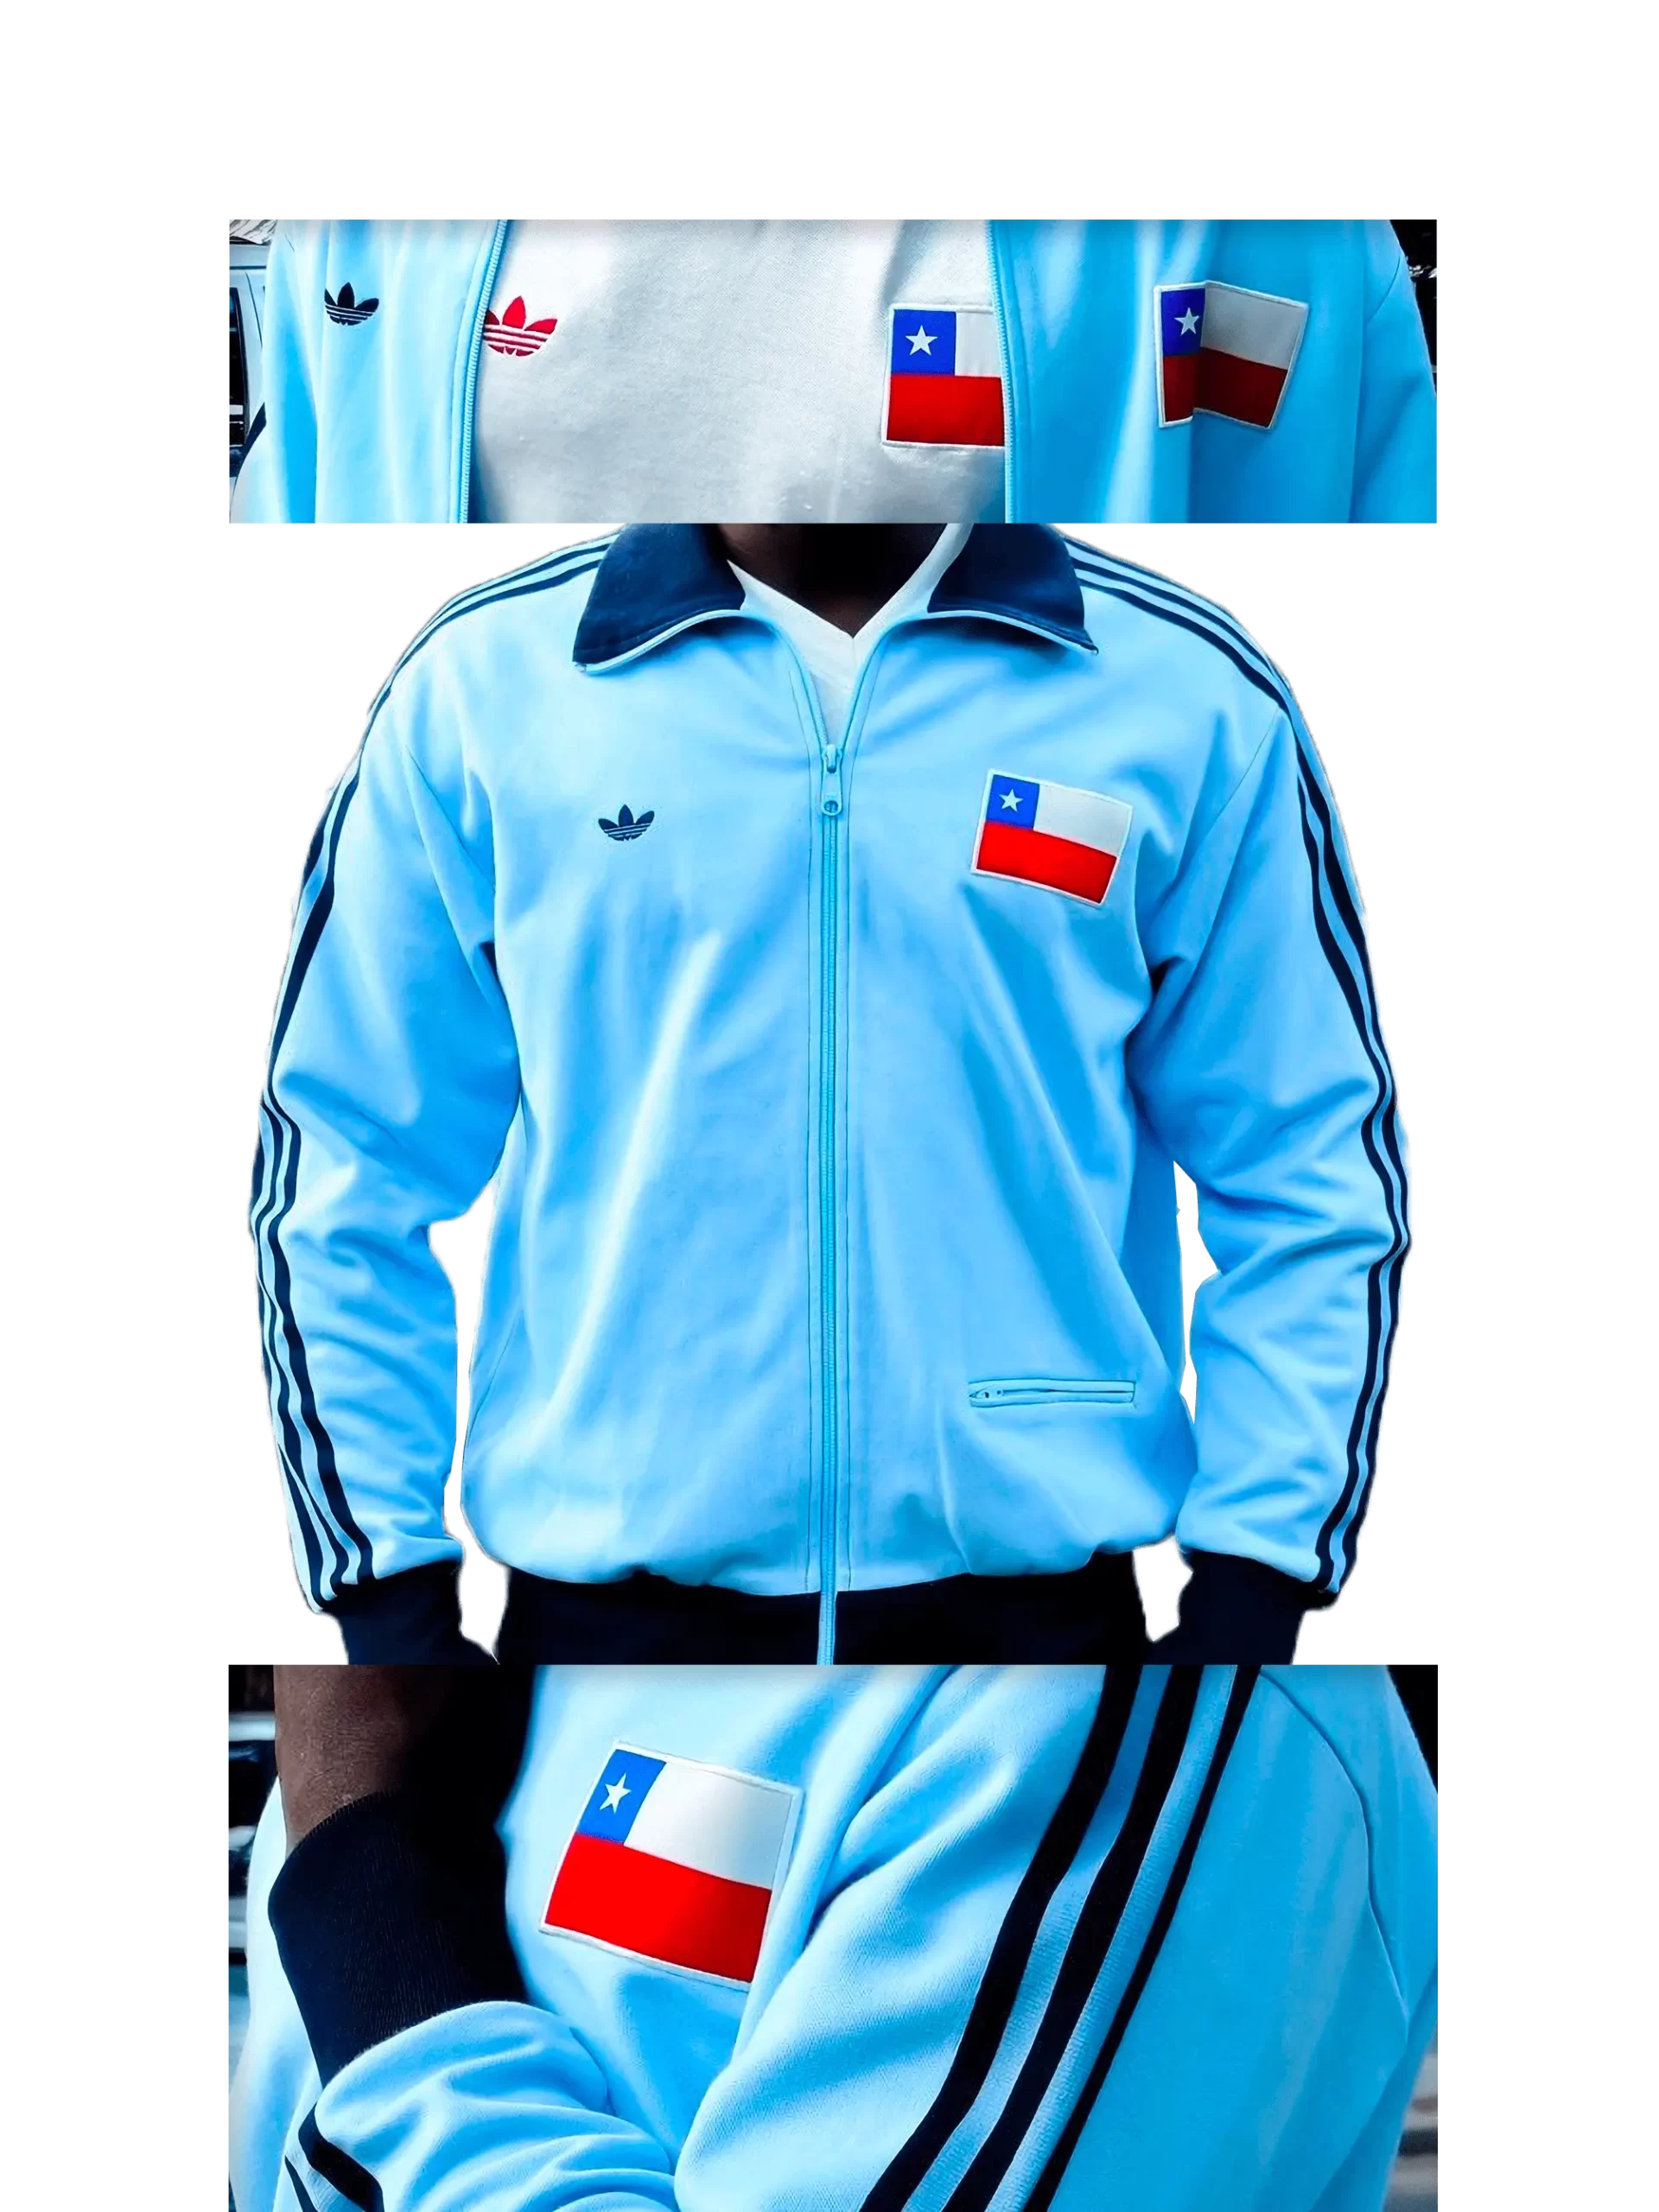 Men's 2003 Chile '62 Fouilloux TT by Adidas Originals: Fascinating (EnLawded.com file #lmchk80340ip2y124789kg9st)